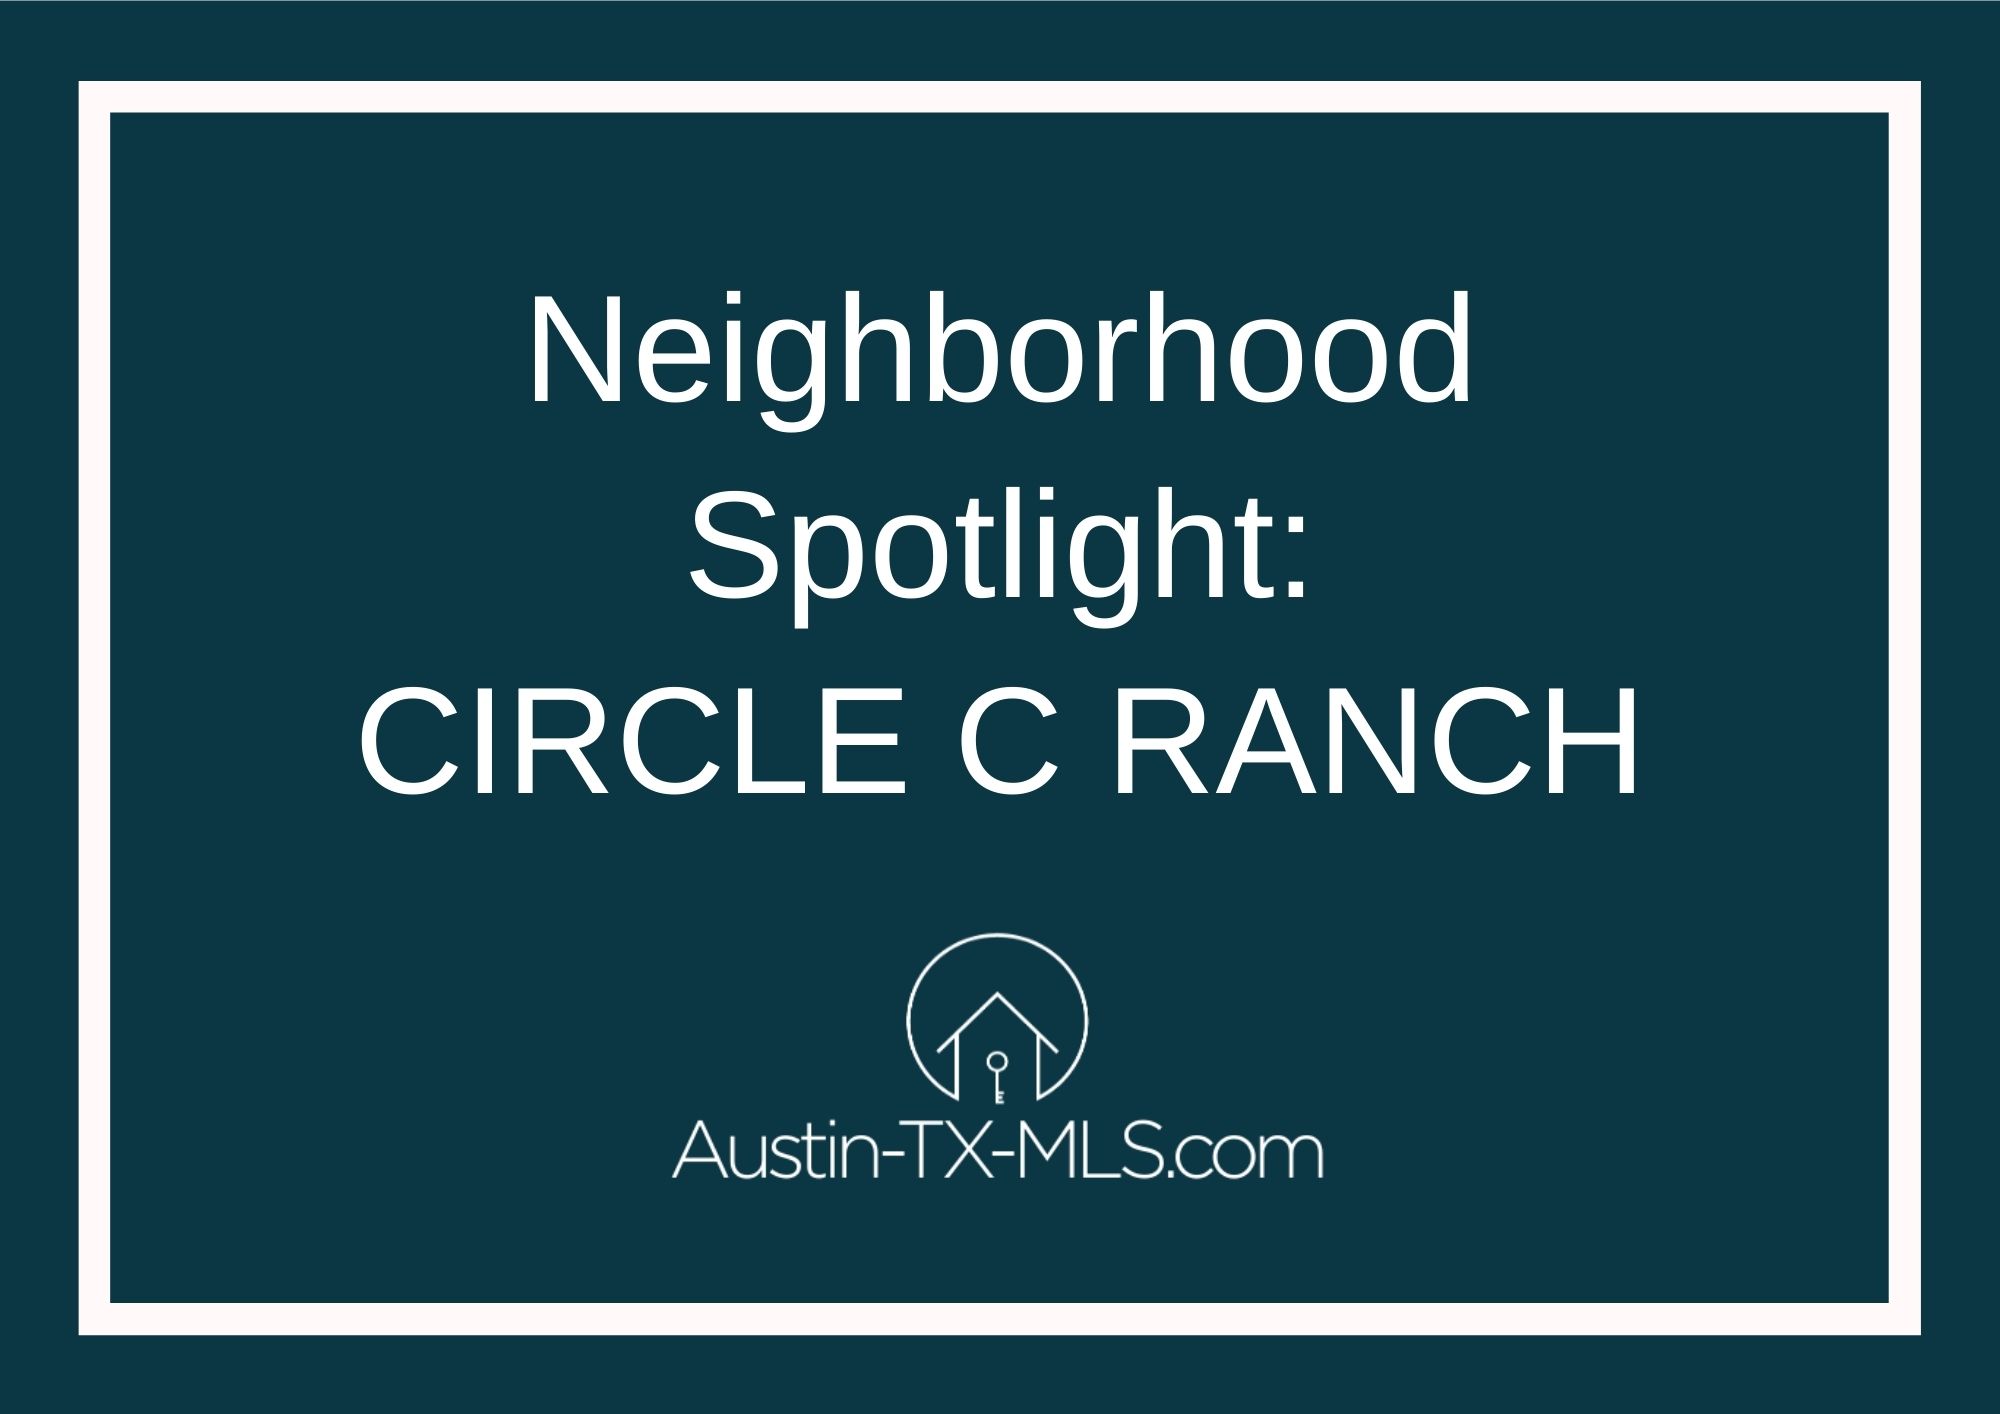 Circle C Ranch Neighborhood Spotlight Austin Texas real estate